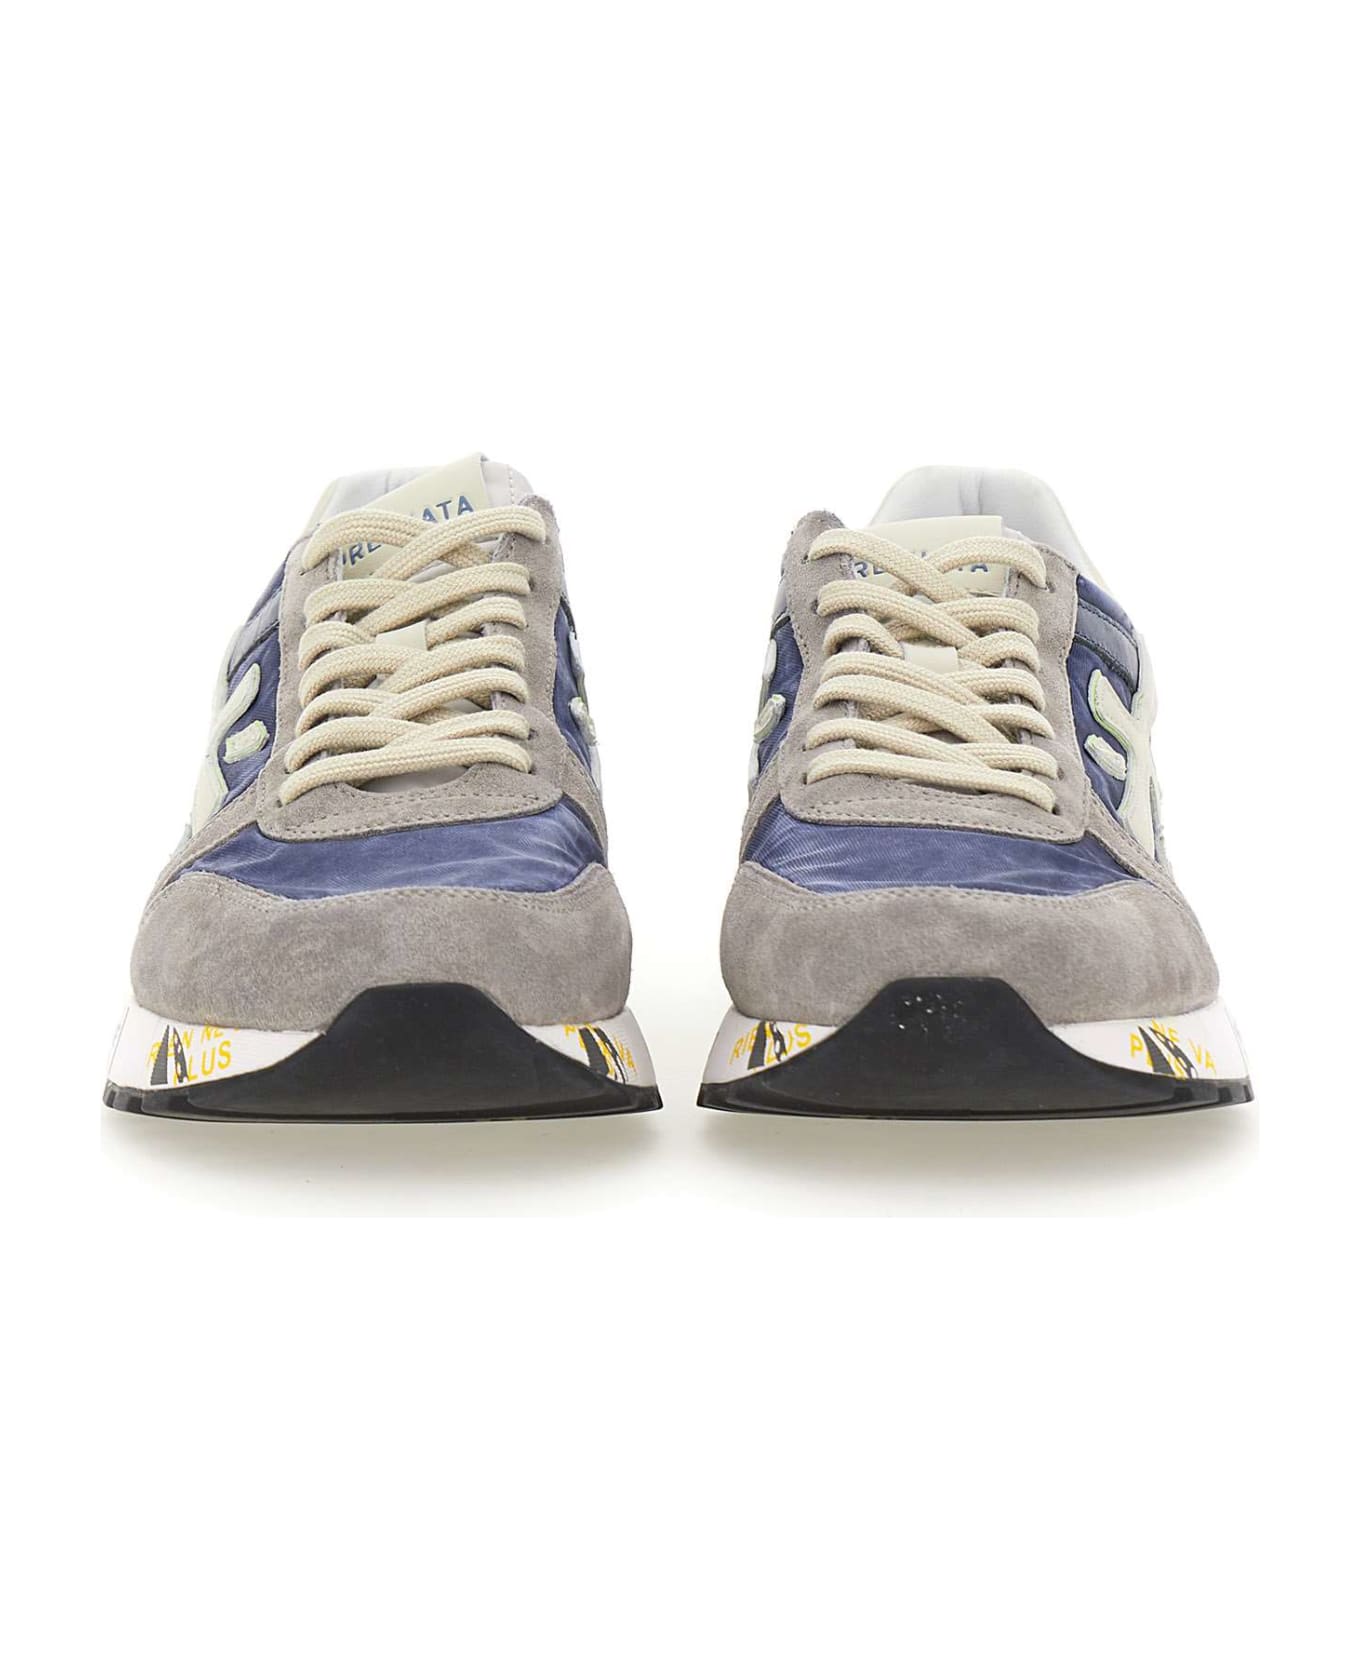 Premiata "mick 6819" Sneakers - BLUE/grey